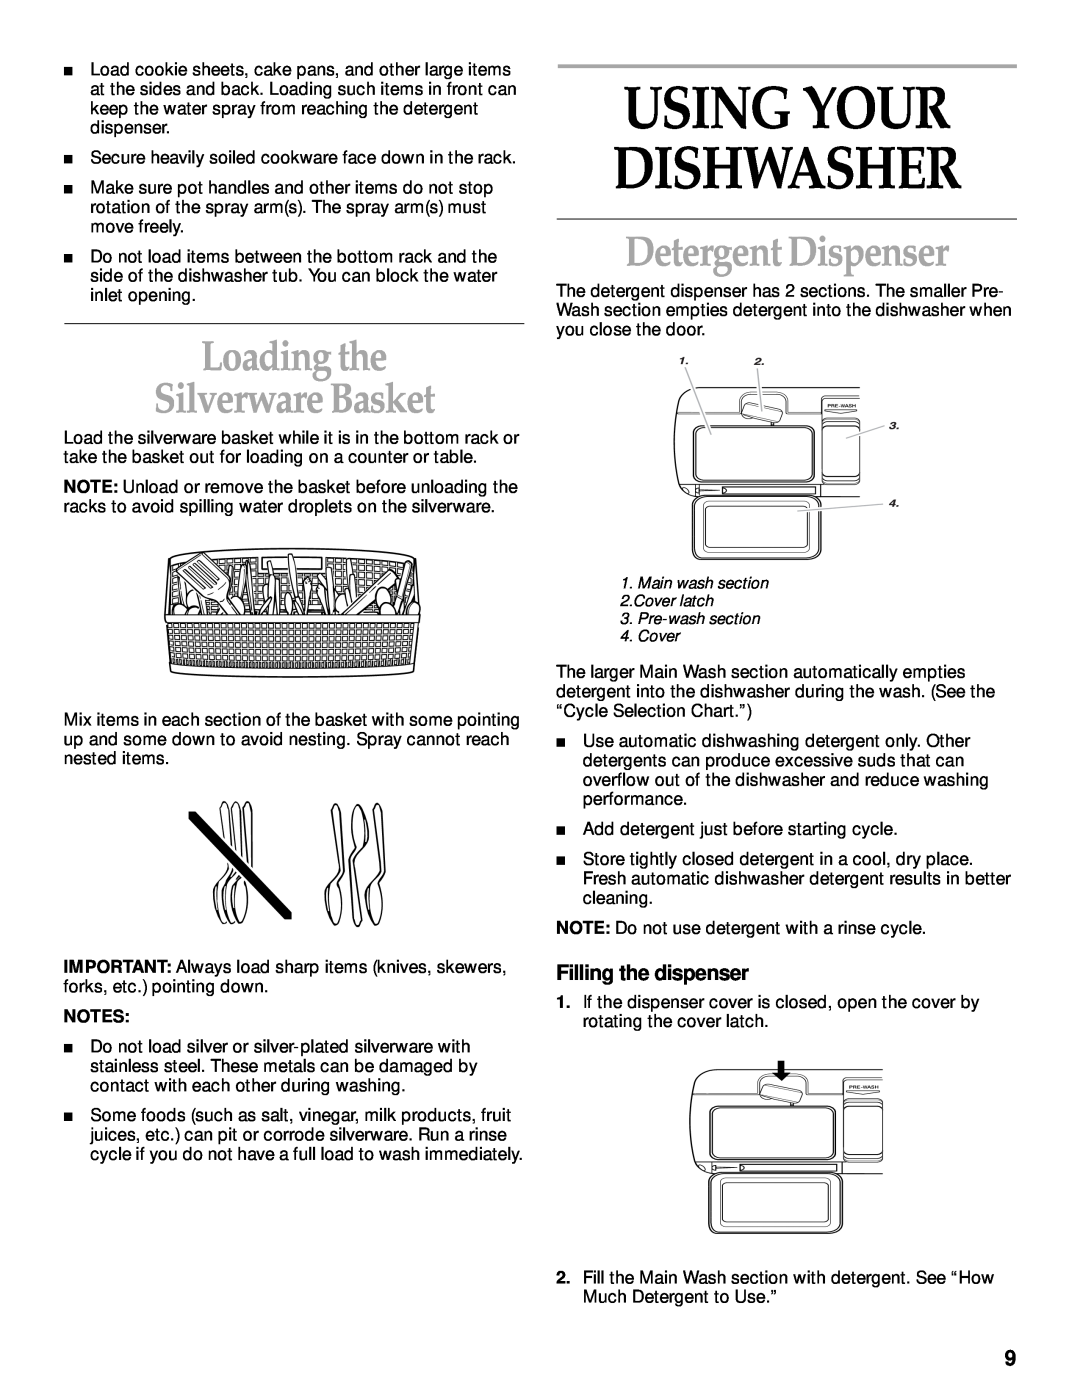 KitchenAid KUDM25SH manual Loading the Silverware Basket, Detergent Dispenser, Filling the dispenser, Using Your Dishwasher 